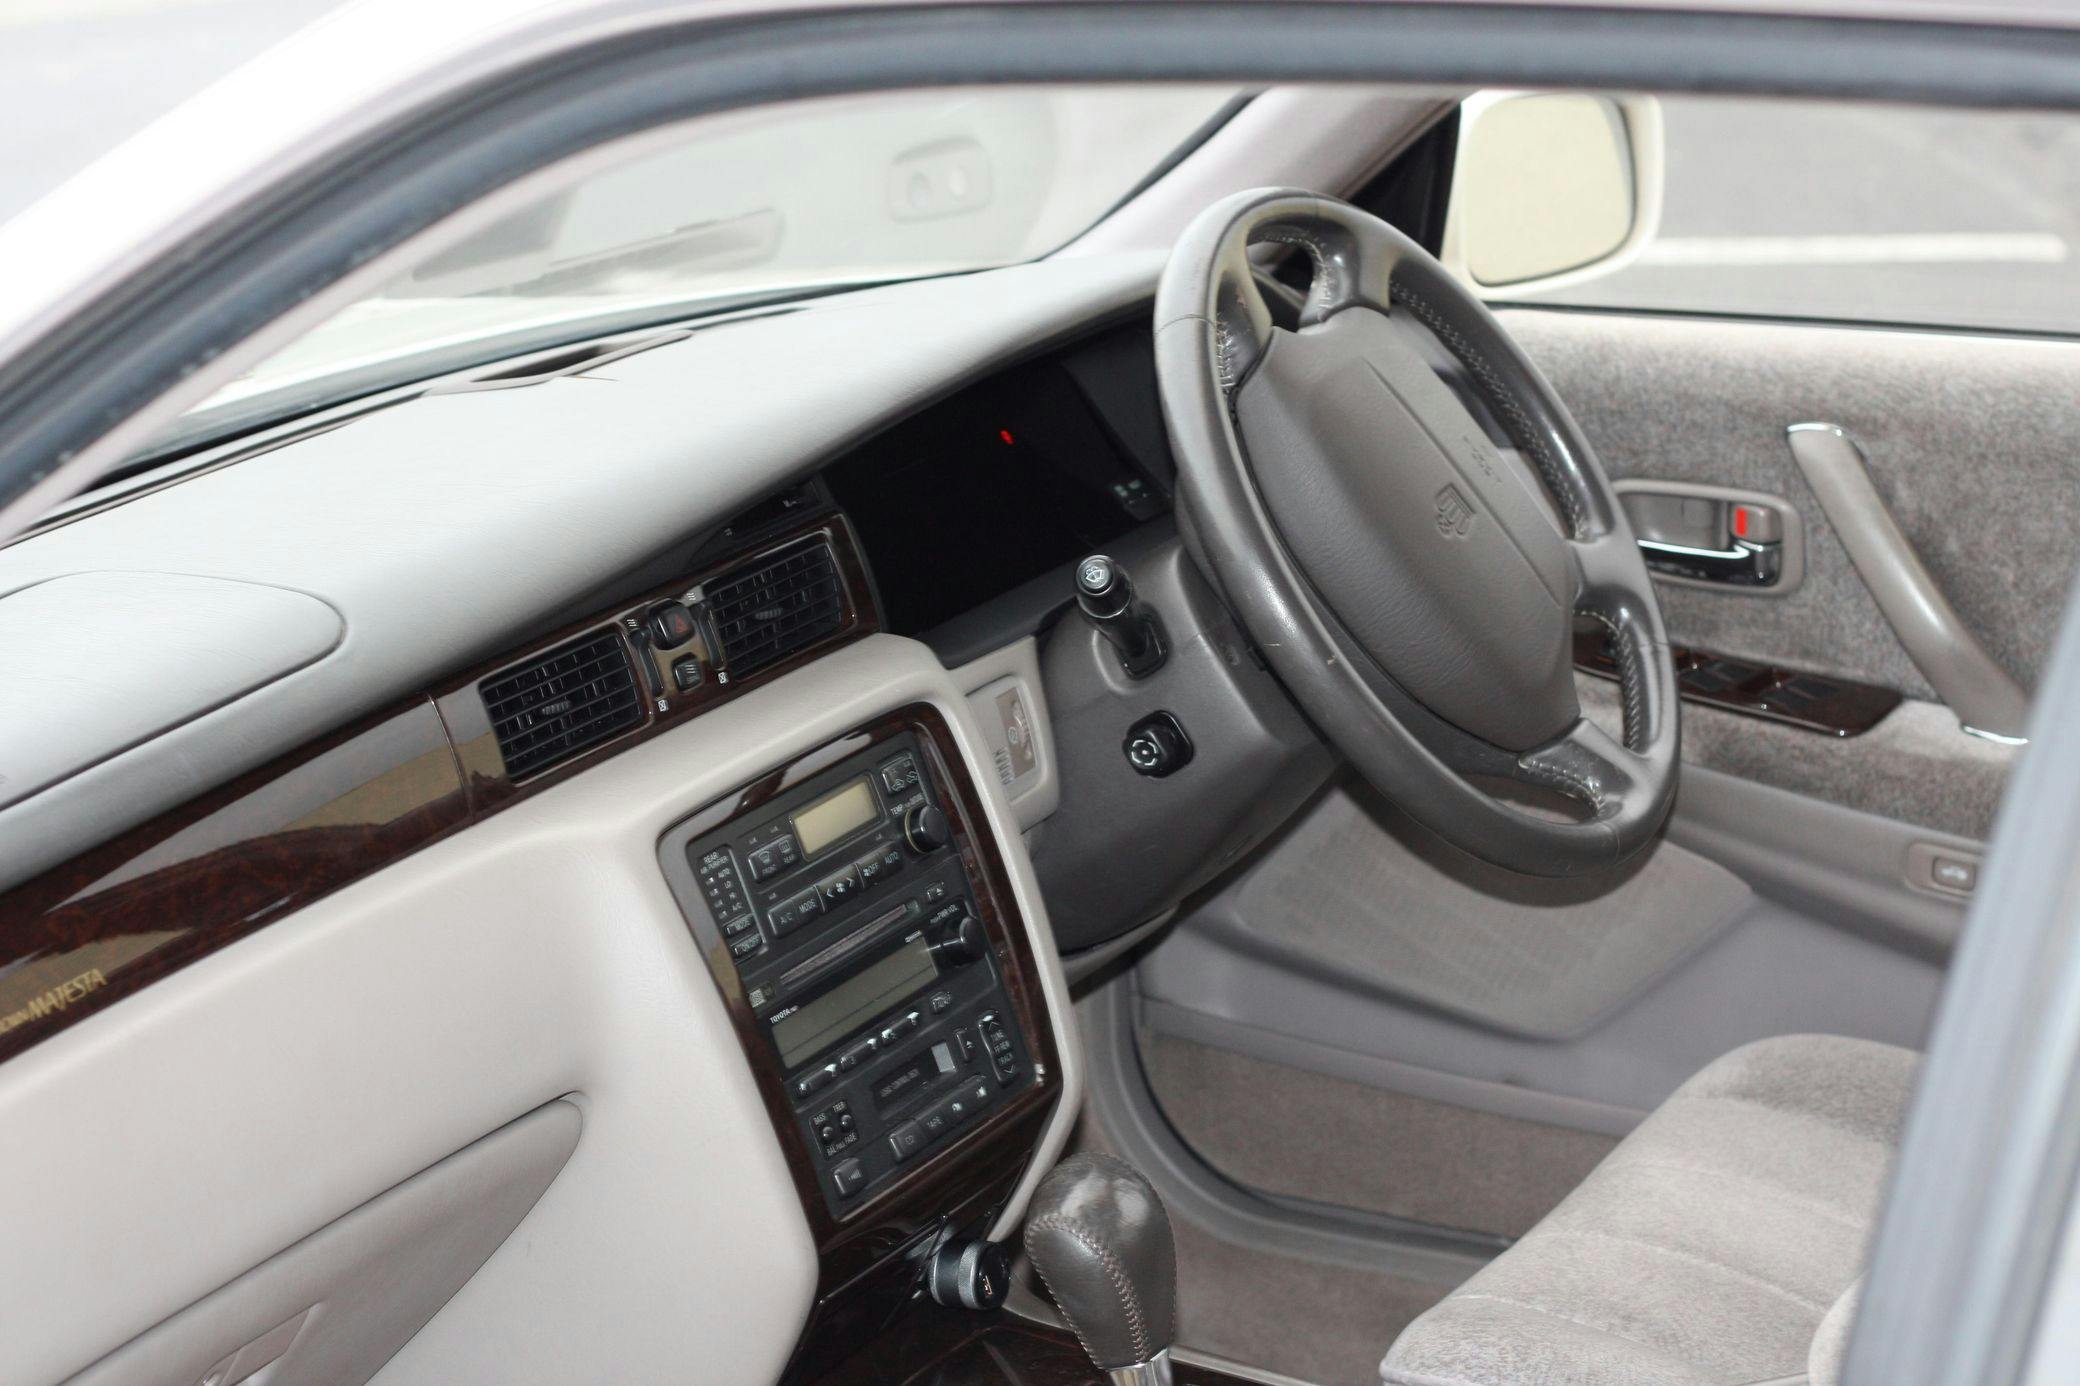 Toyota Crown Sedan interior front angle